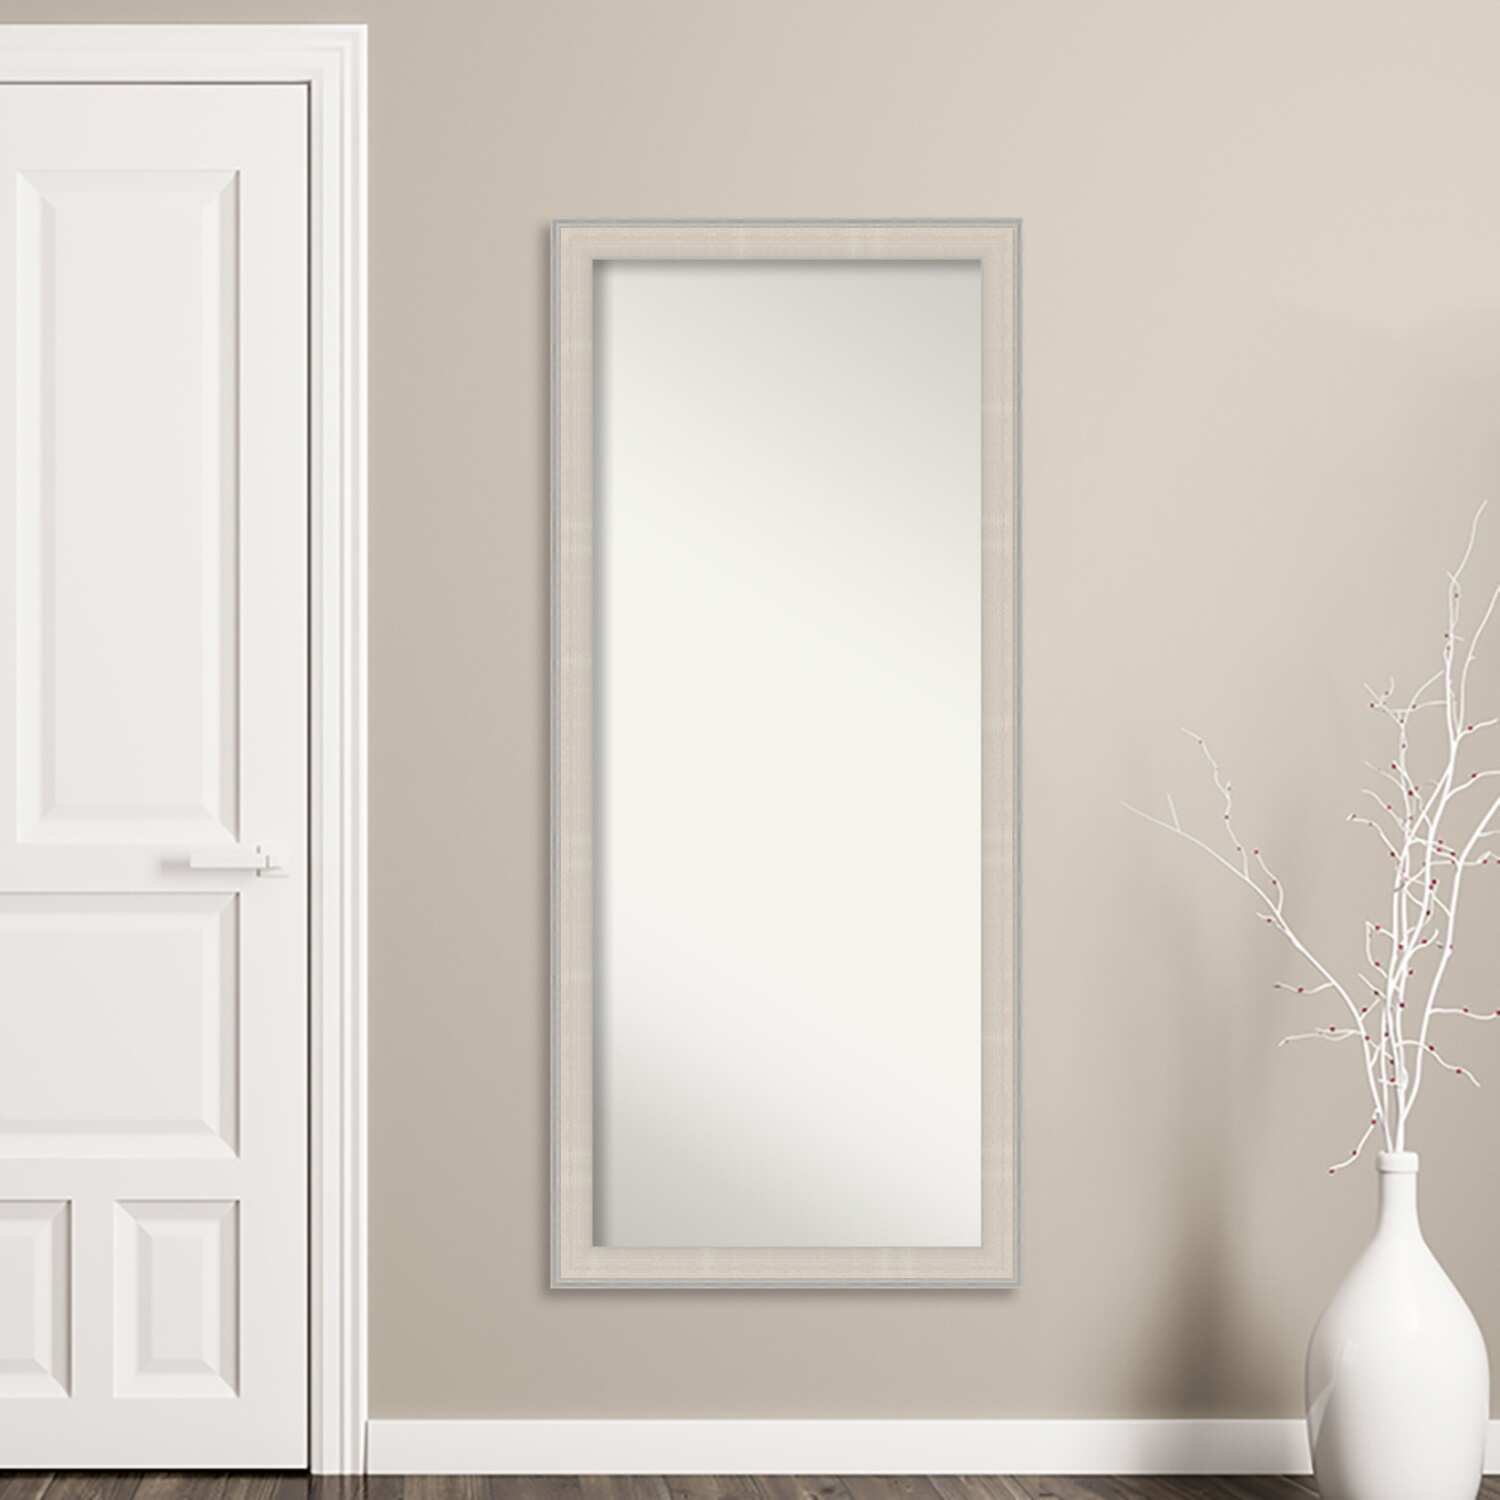 Cottage White Silver Non-Beveled Wood Framed Full-Length Floor Leaner Mirror - Cottage White Silver - Glass Size 24x60